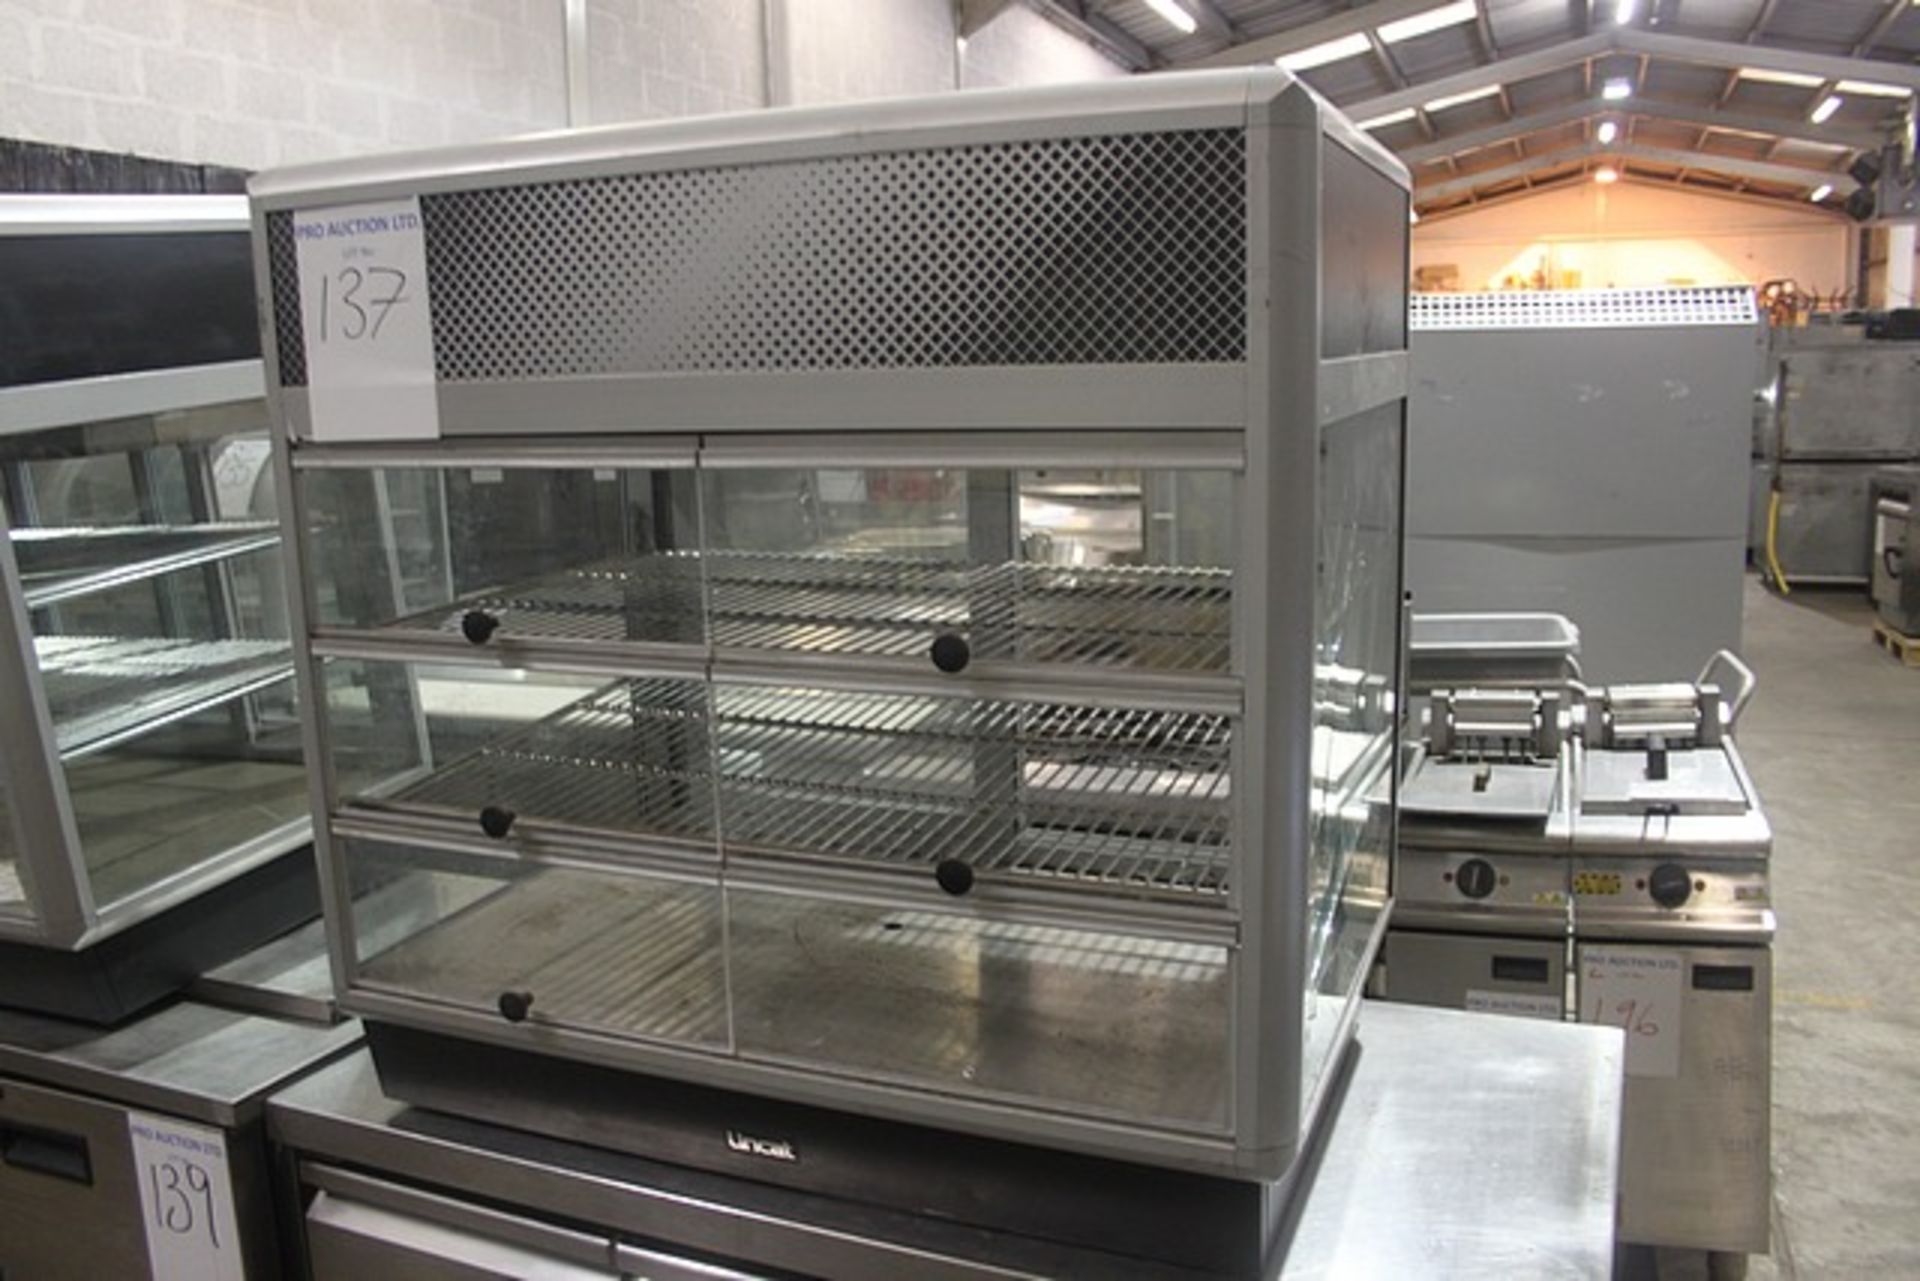 Lincat D6R100S refrigerated merchandiser back service or self service extruded aluminium frames &